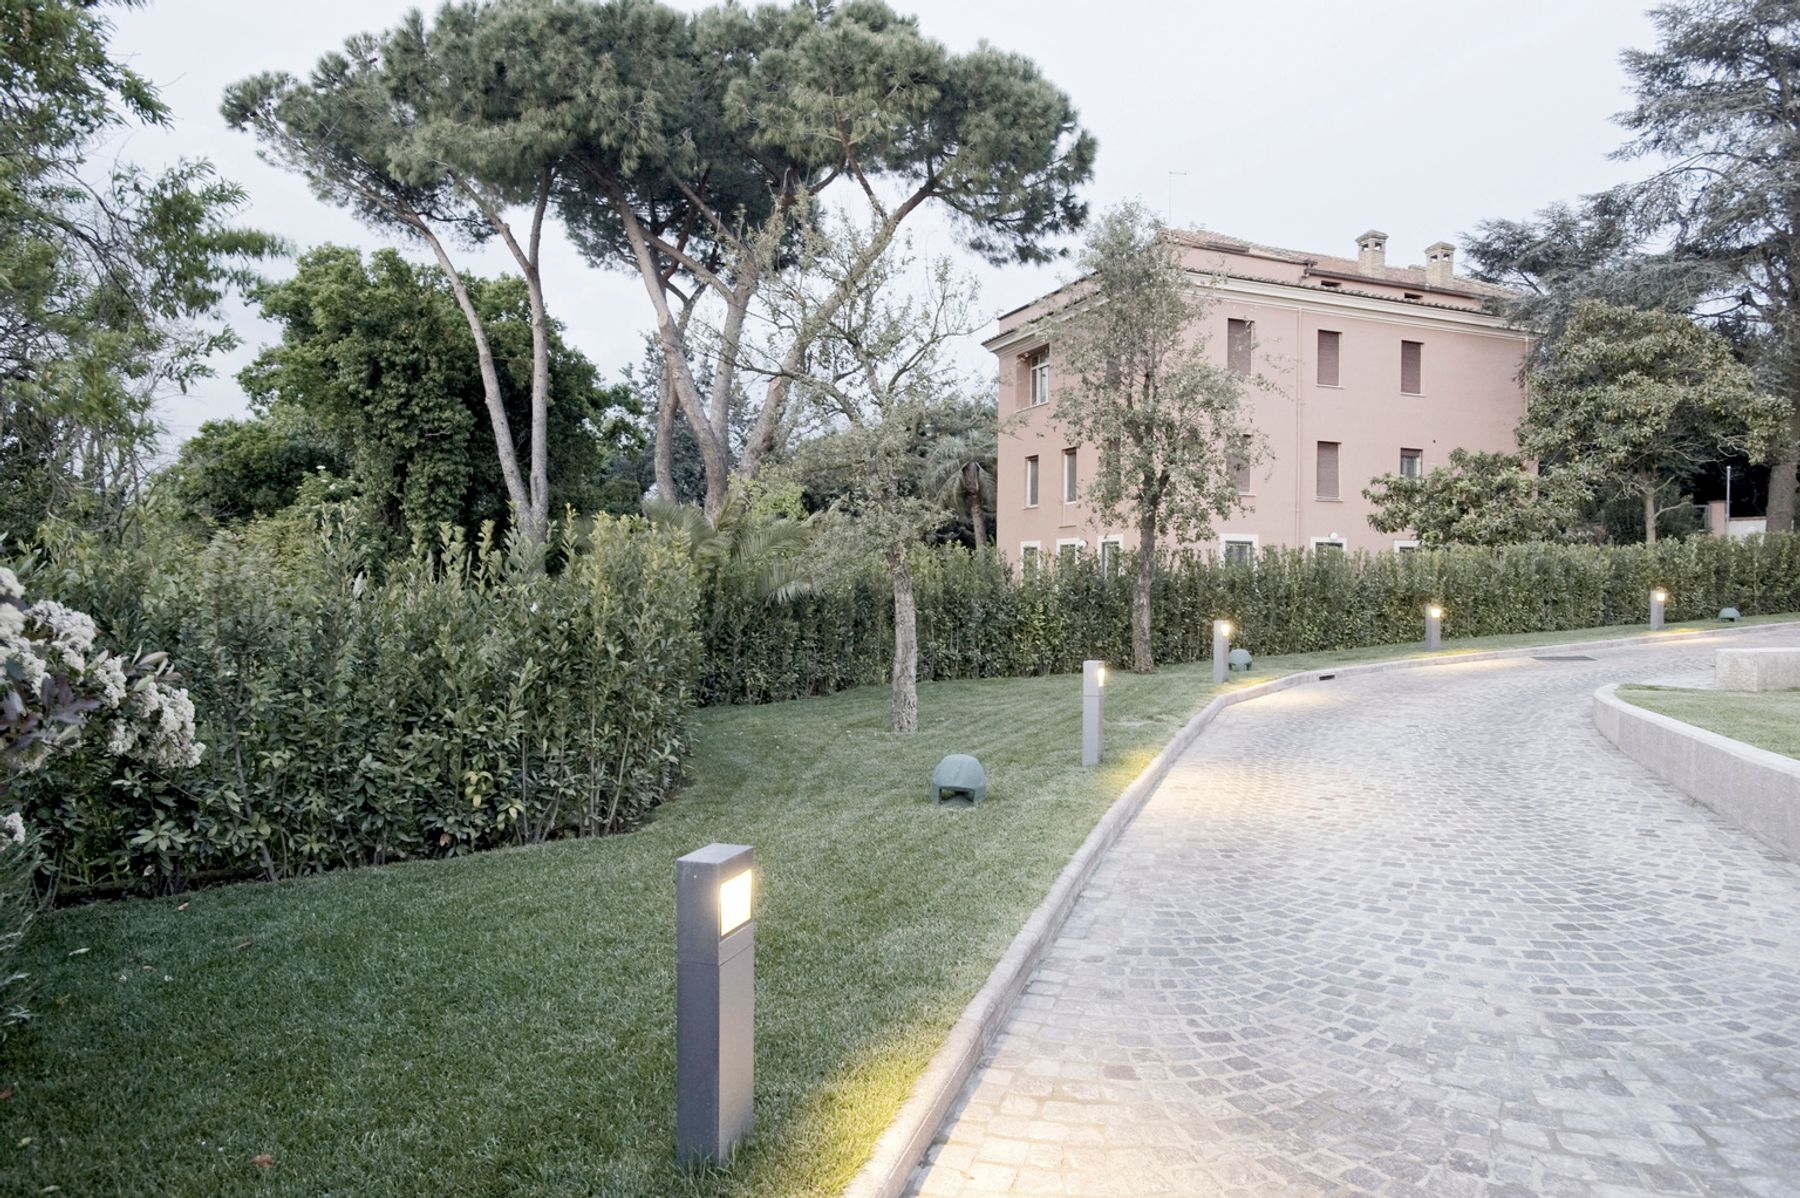 RDS Radio Dimensione Suono, Rome. Architect: Nigel Ryan, Rome. Lighting design: Baldieri, Rome.